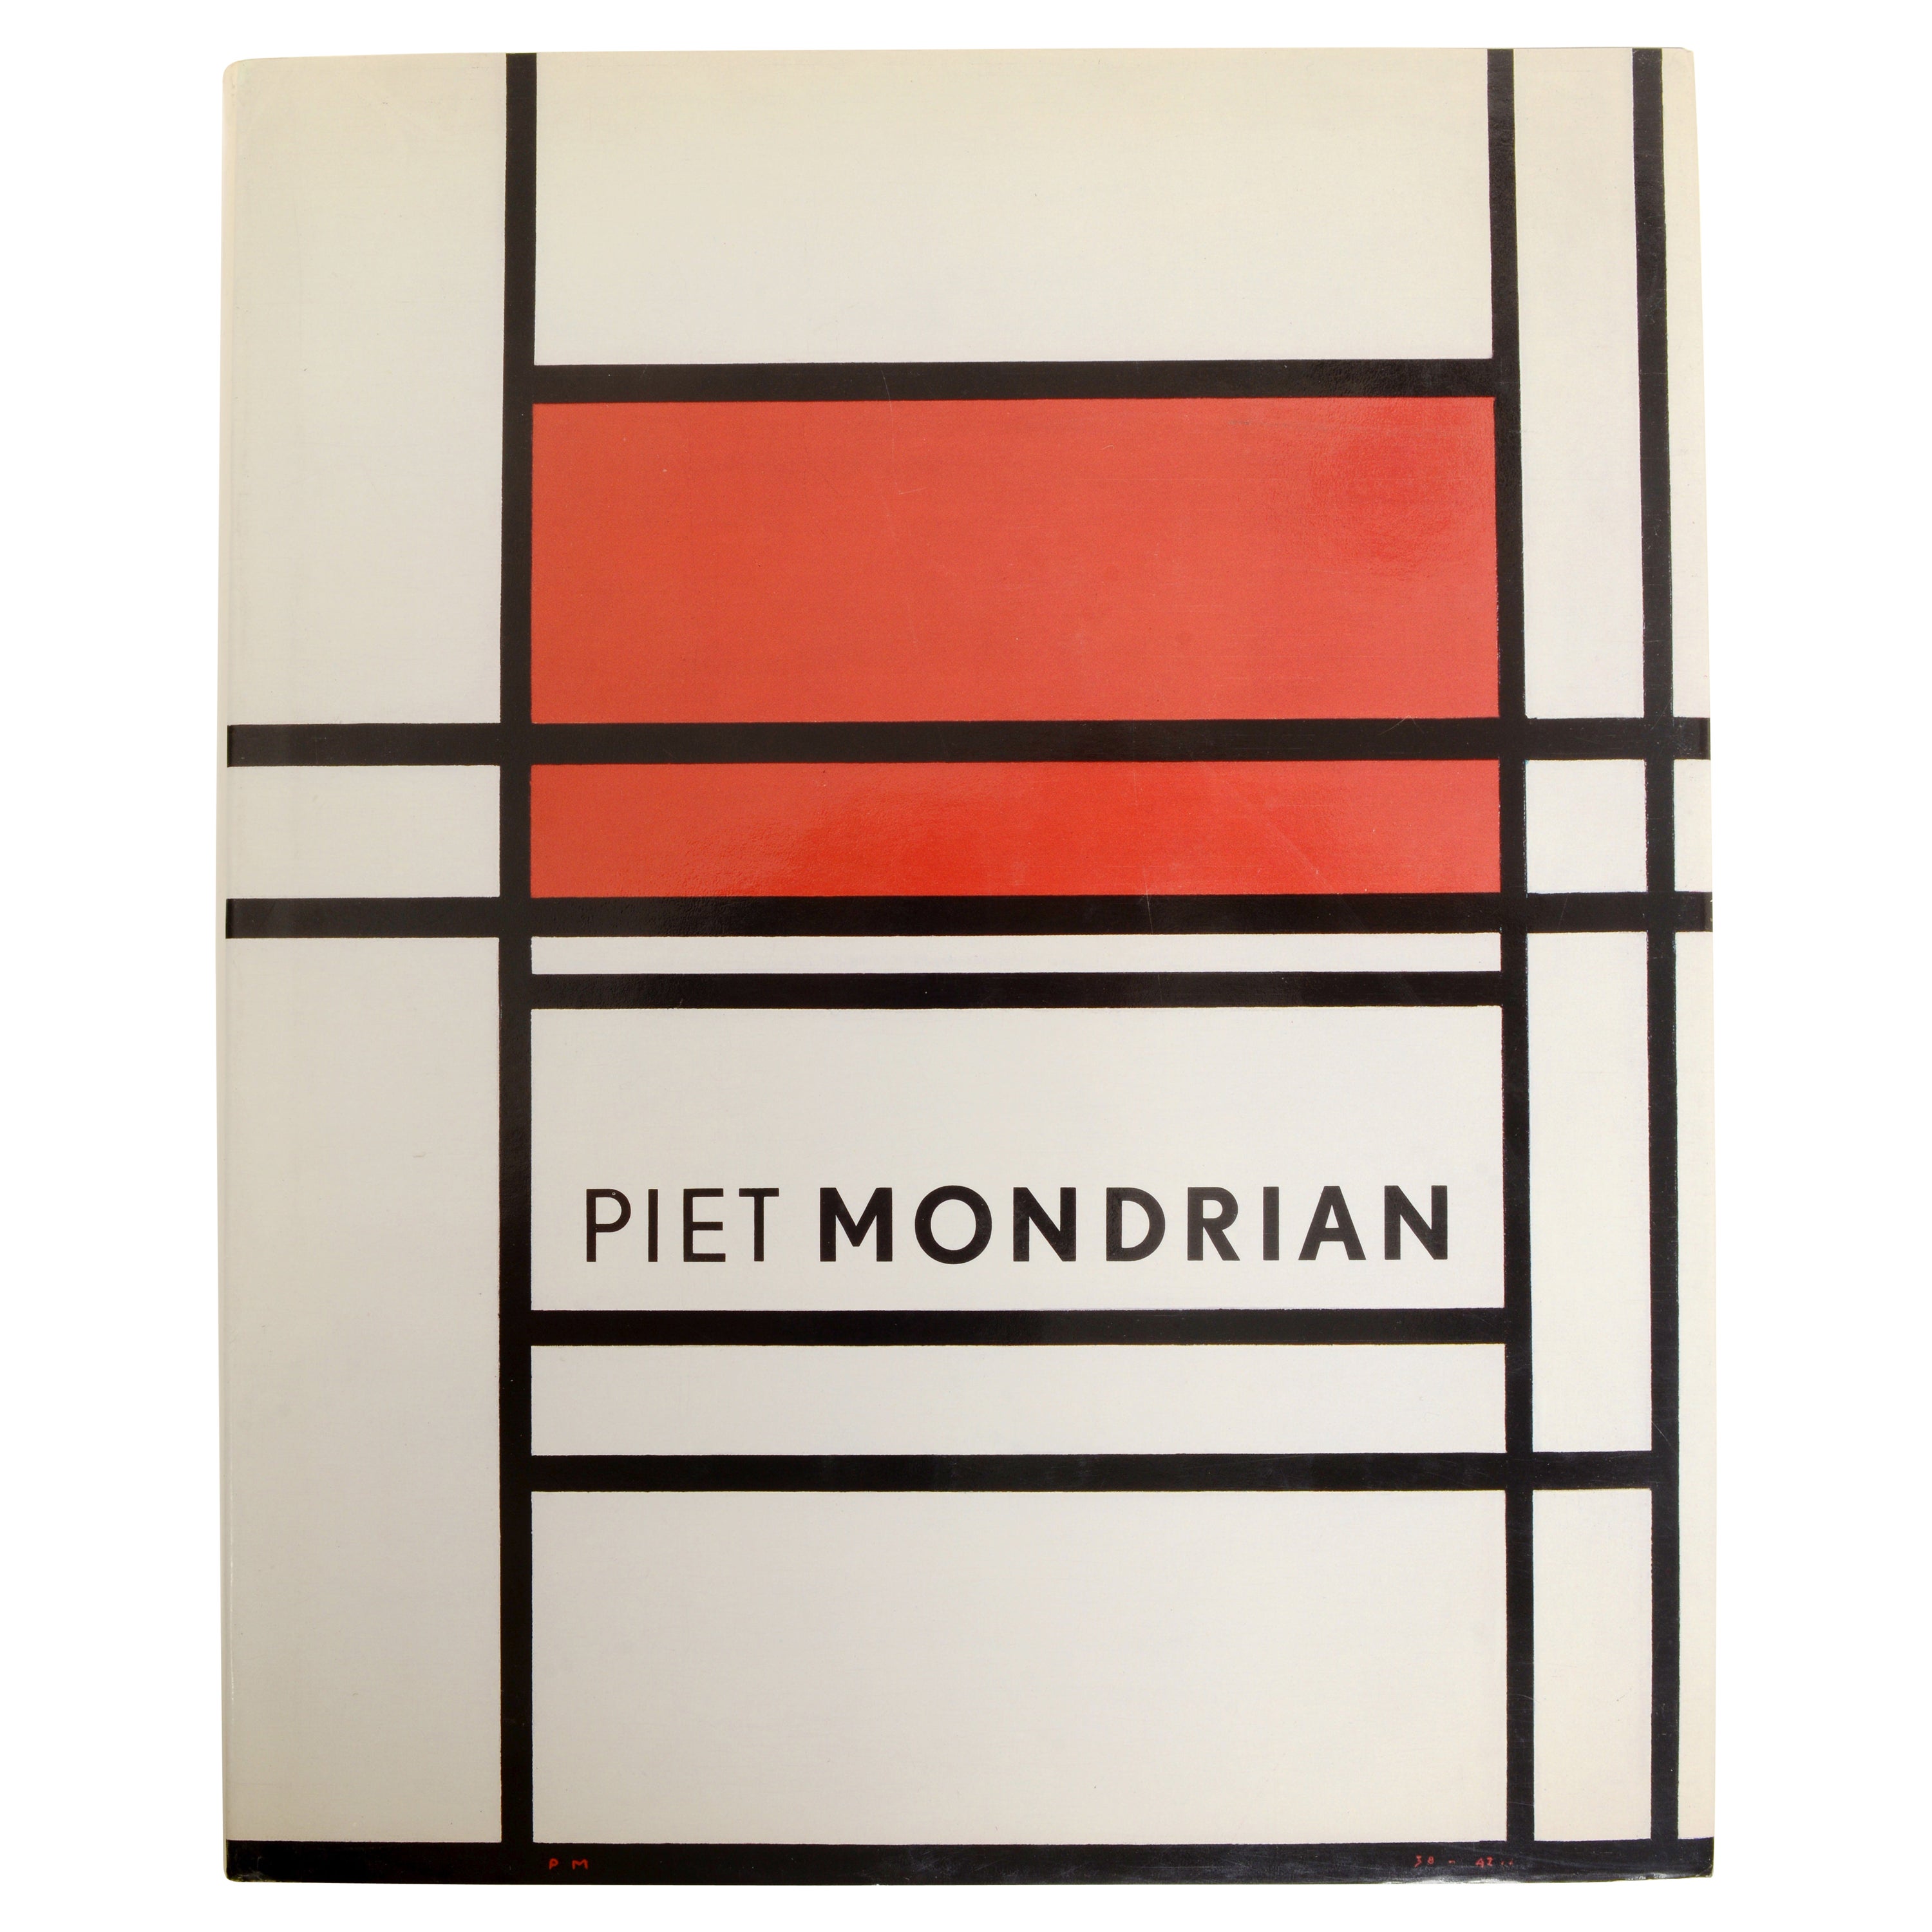 Piet Mondrian, by Yve-Alain Bois, 1st Ed Exhibition Catalog